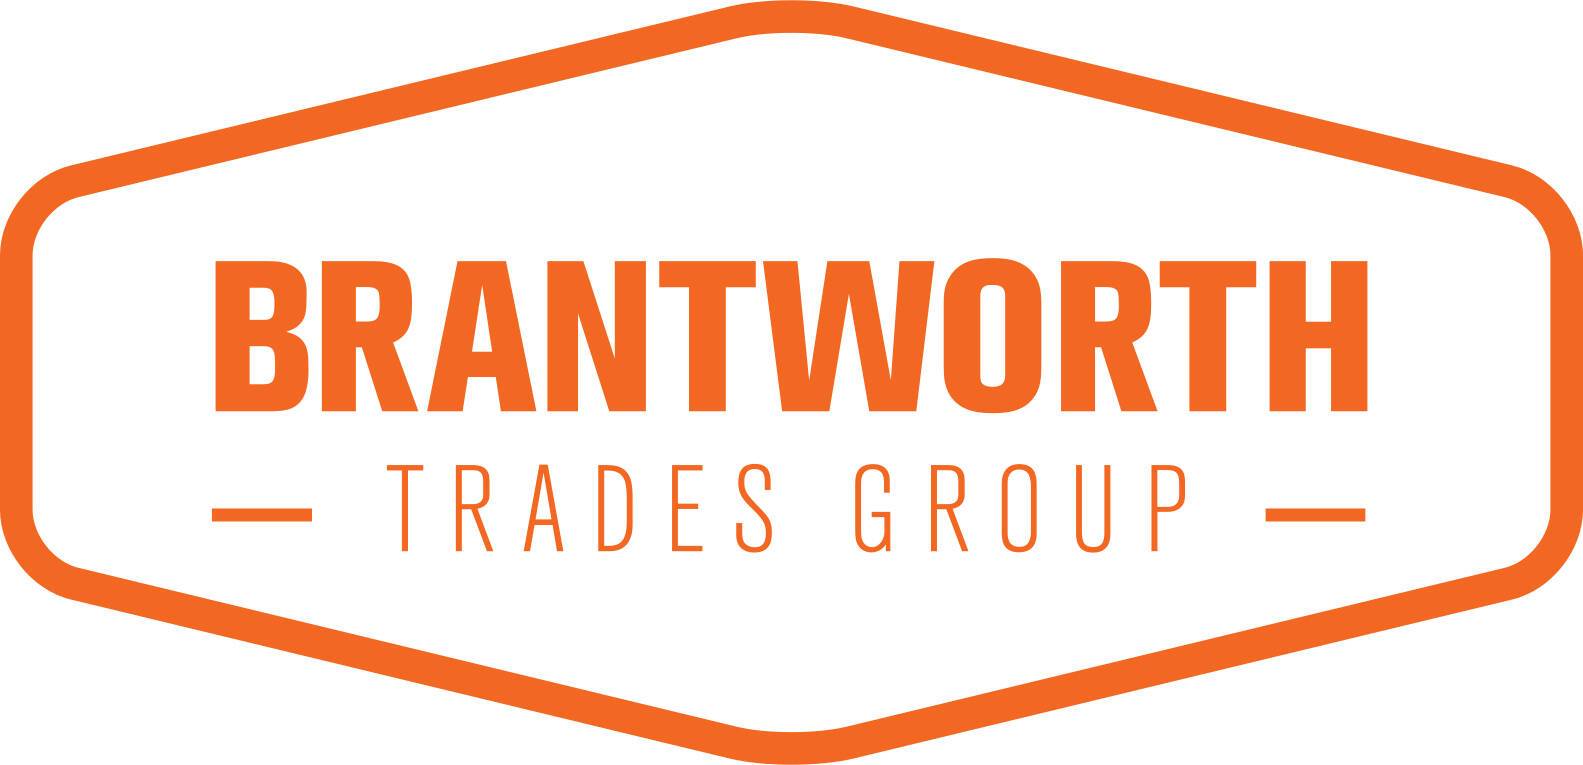 Brantworth Trades Group